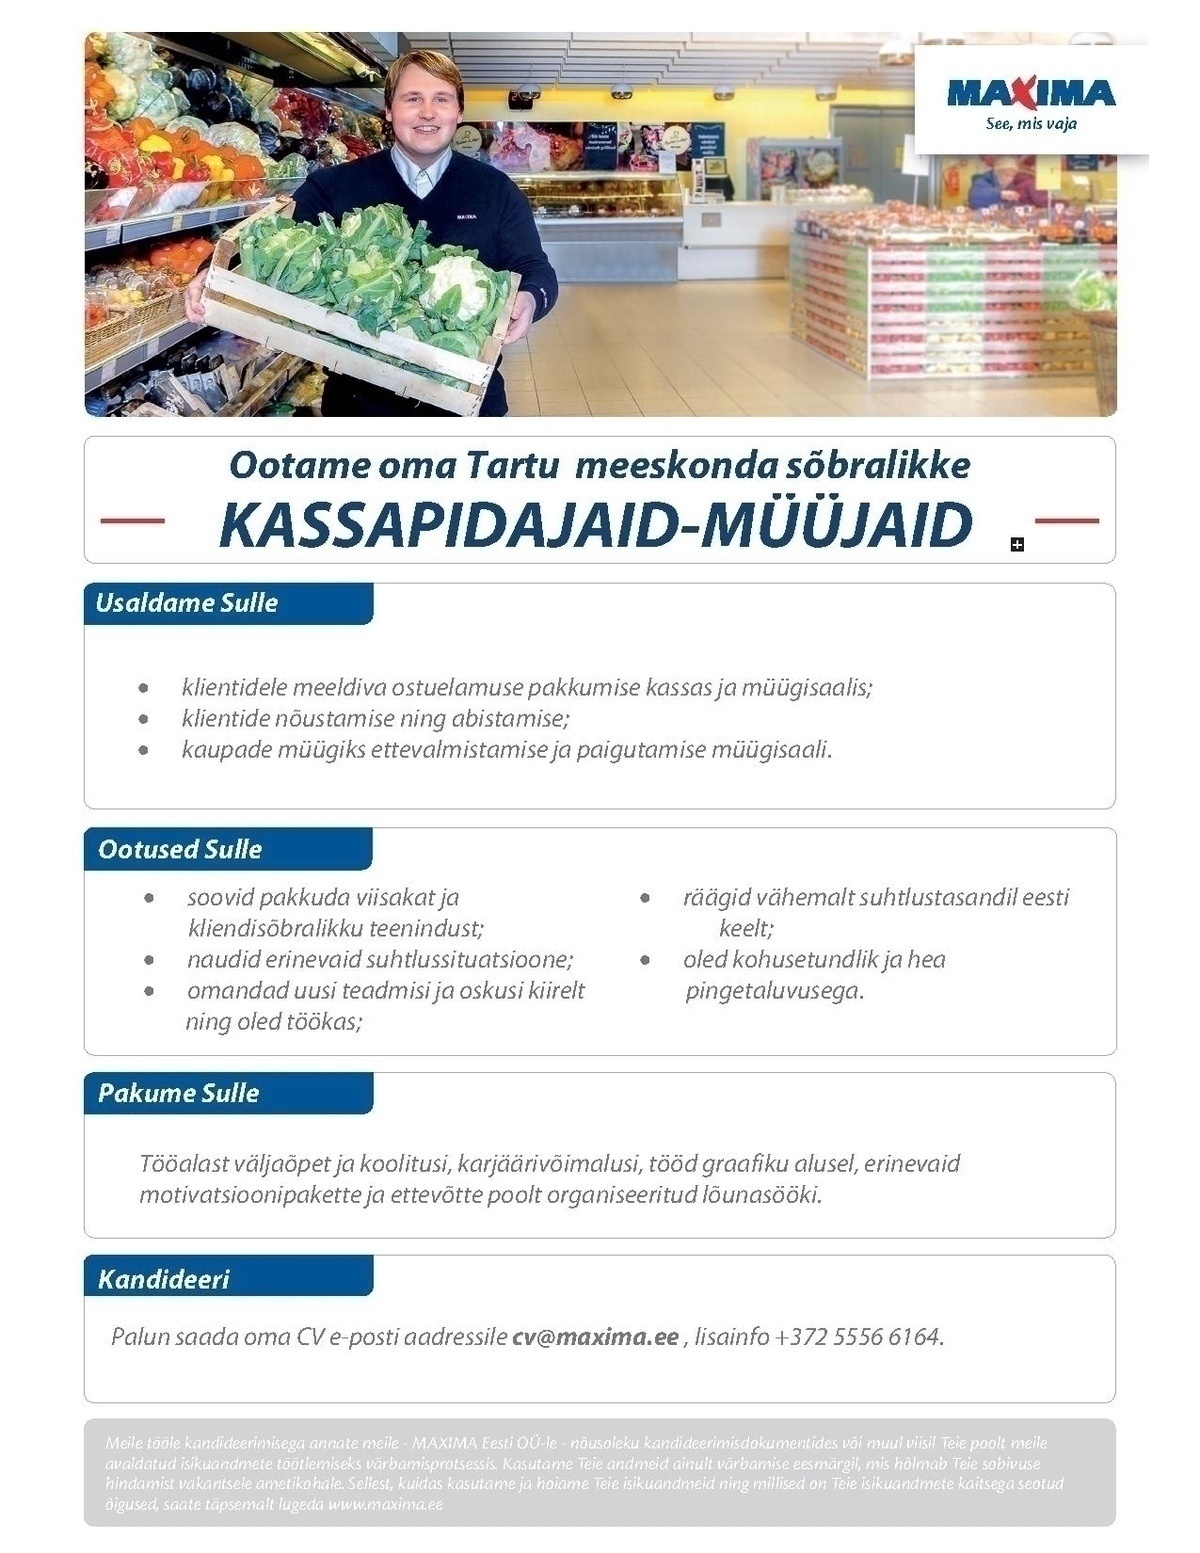 Maxima Eesti OÜ Kassapidaja-müüja Tartu Maximas (Turu 14)